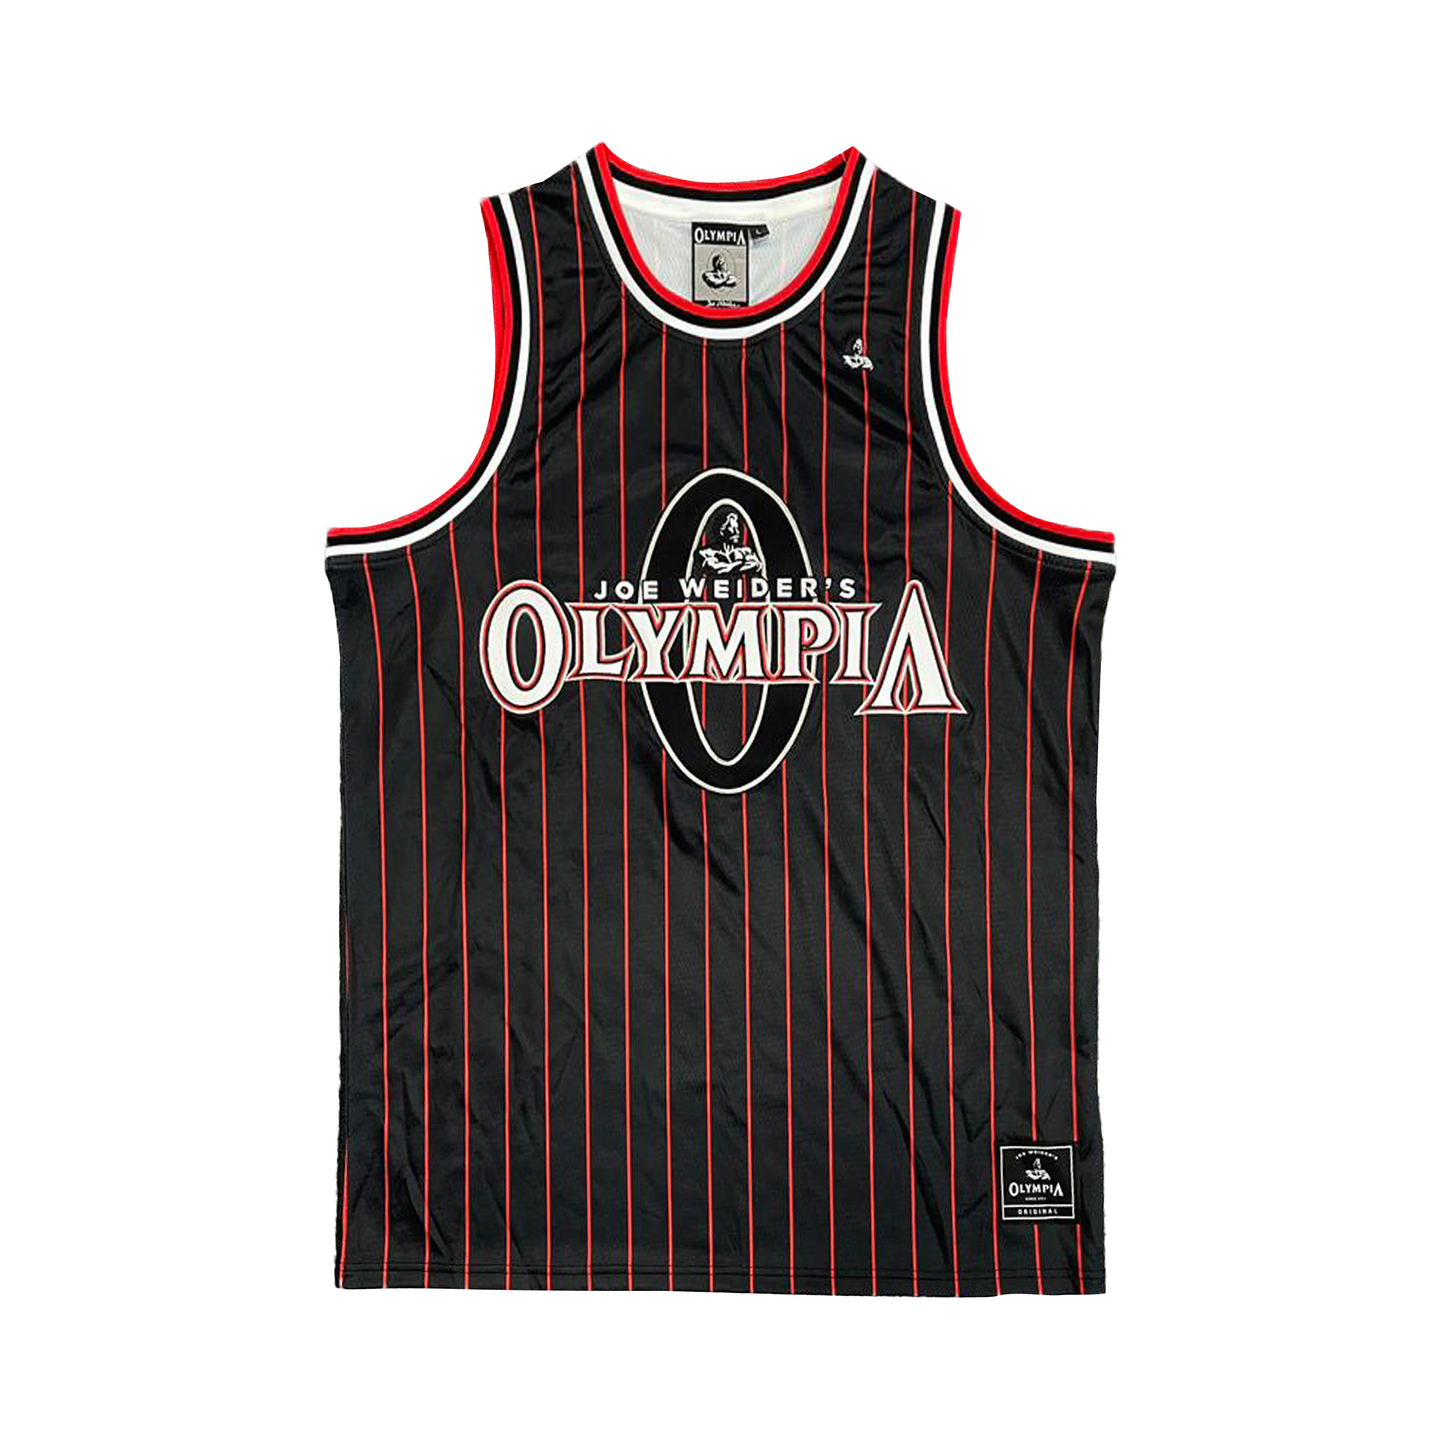 Olympia Jersey Black w/ Red Pinstripe